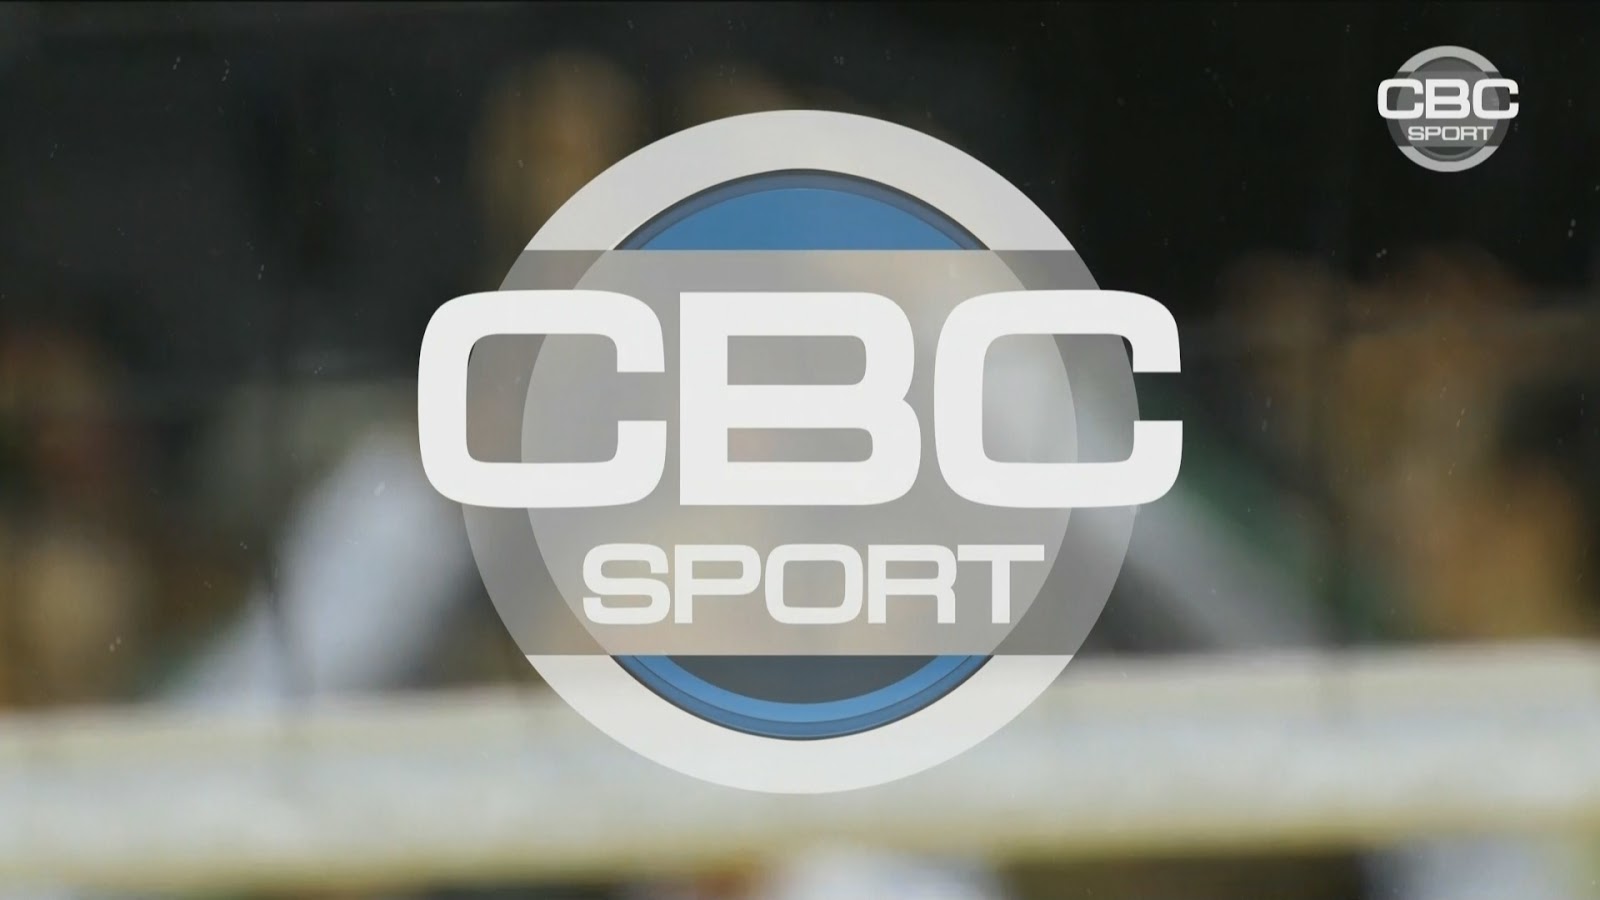 Cbs sport izle. Канал CBC Sport. СВС Sport Canli. CBC Sport Canli. CBC Sport одежда.